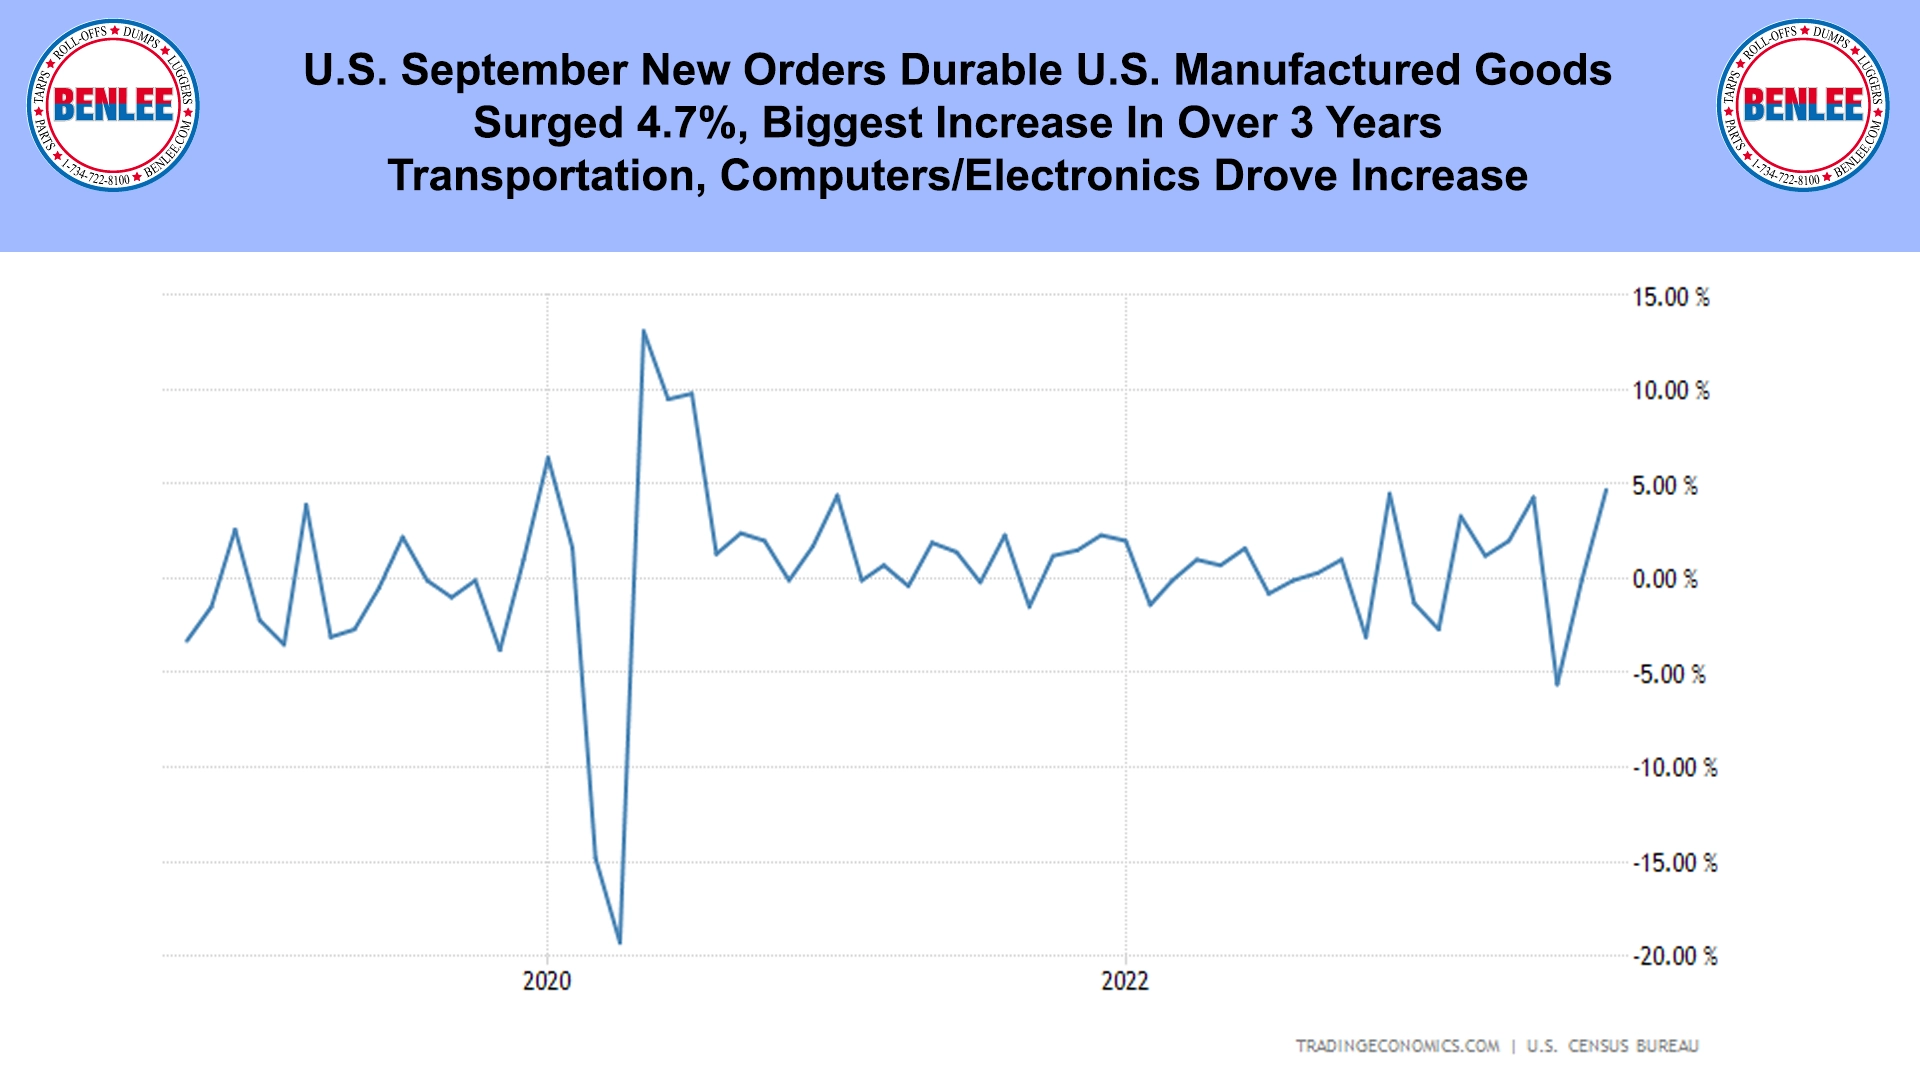 U.S. September New Orders Durable U.S. Manufactured Goods